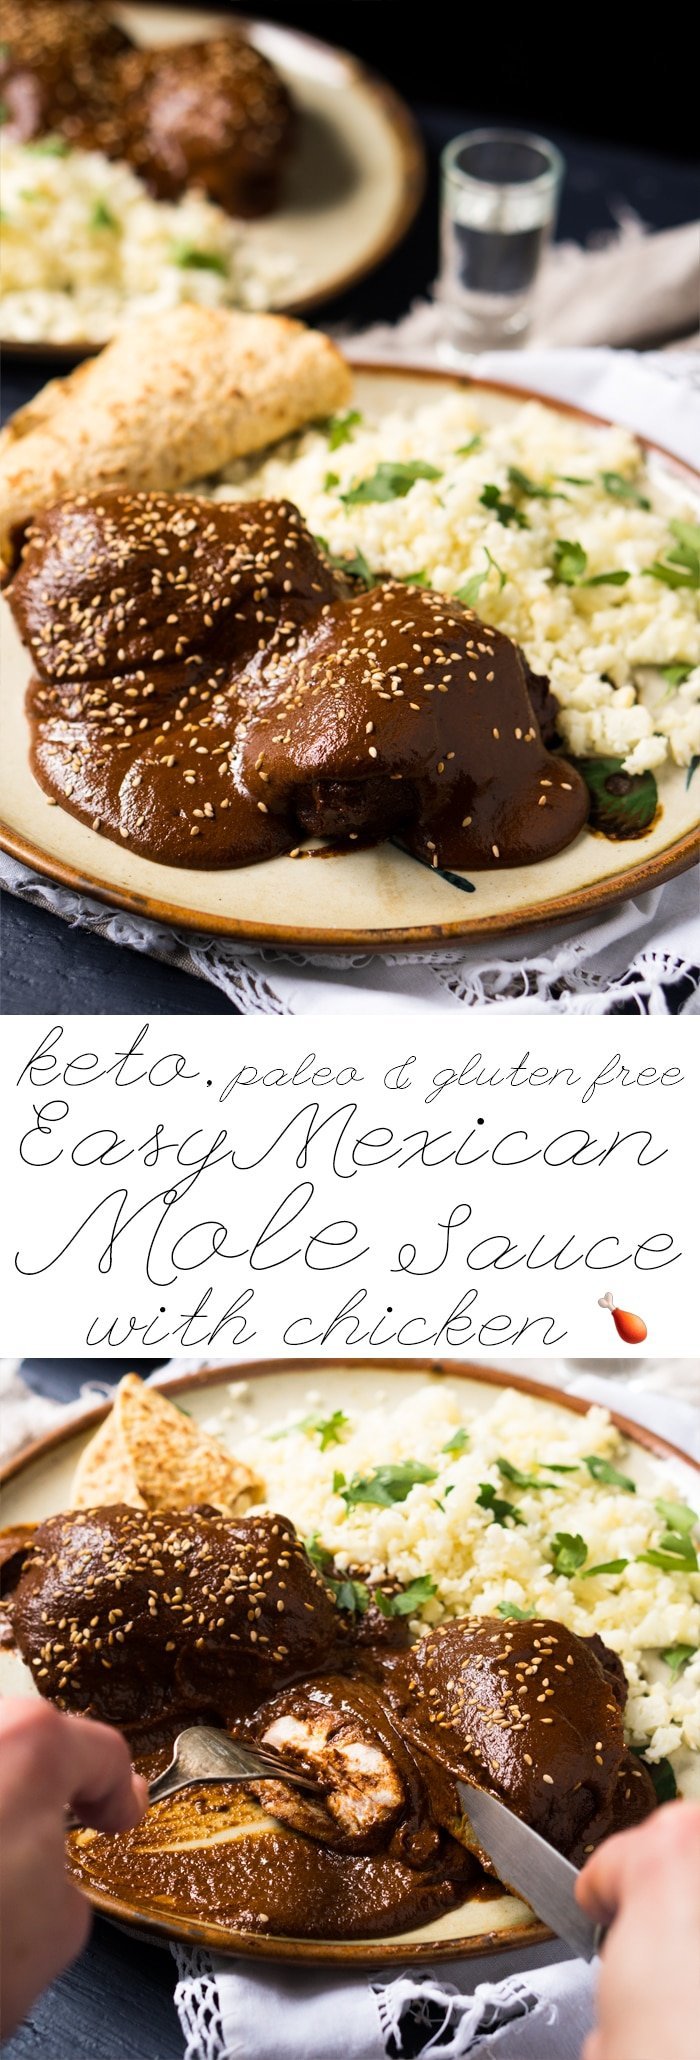 Gluten Free, Paleo & Keto Mexican Mole Sauce With Chicken 🍗 The easy version! #keto #ketomexican #ketodinner